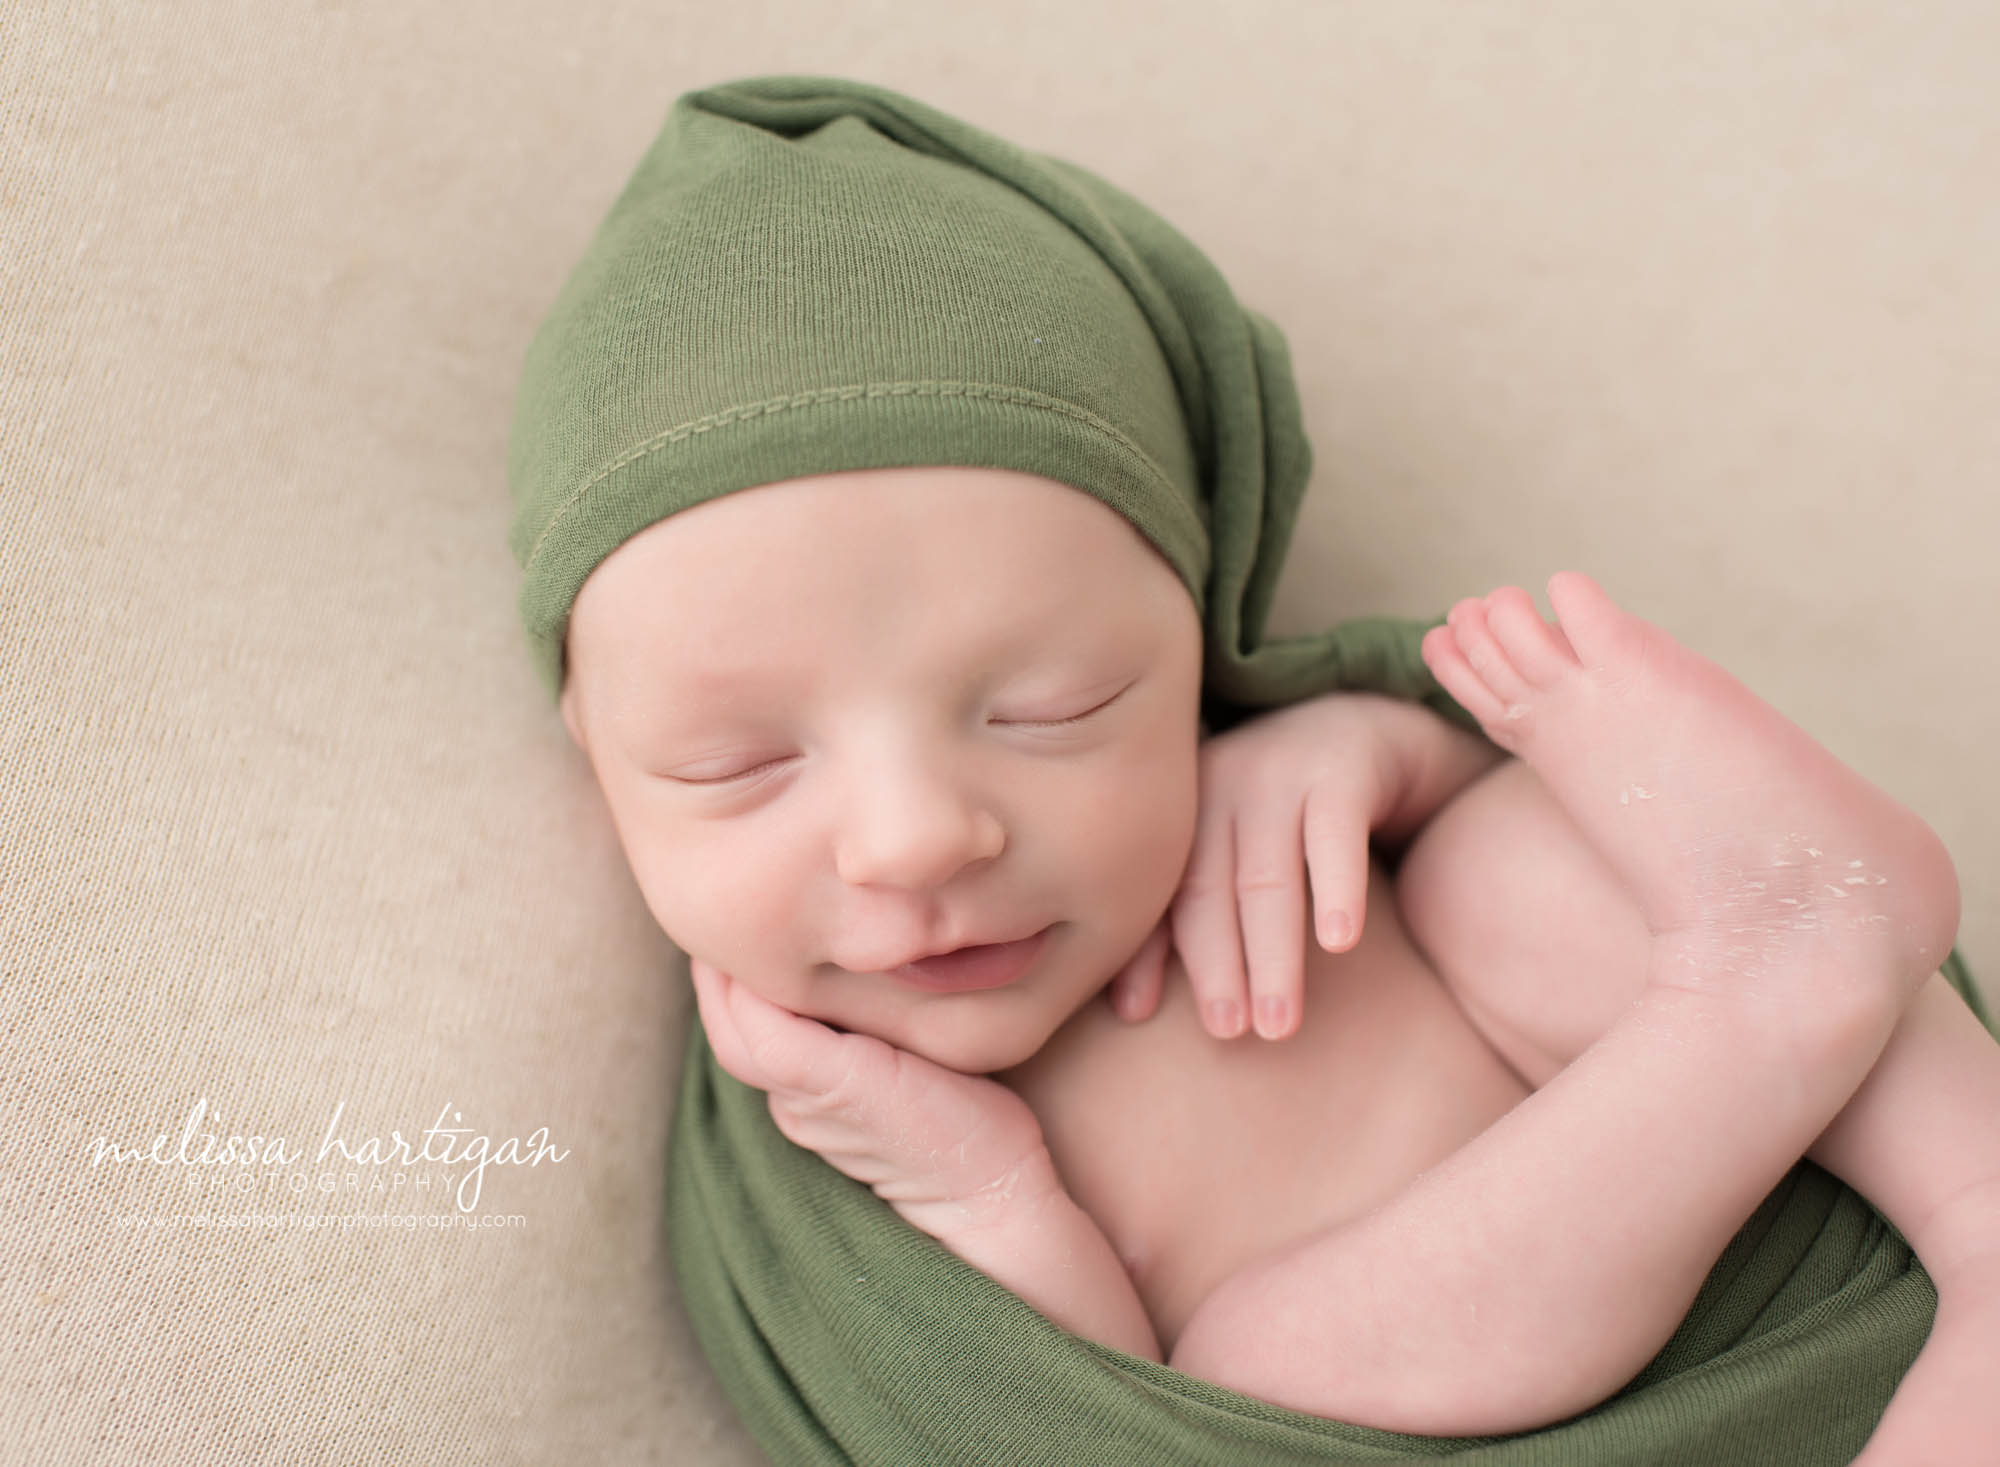 Melissa Hartigan Photography CT Newborn Photographer Stafford baby boy sleeping wearing green hat and wrap smiling